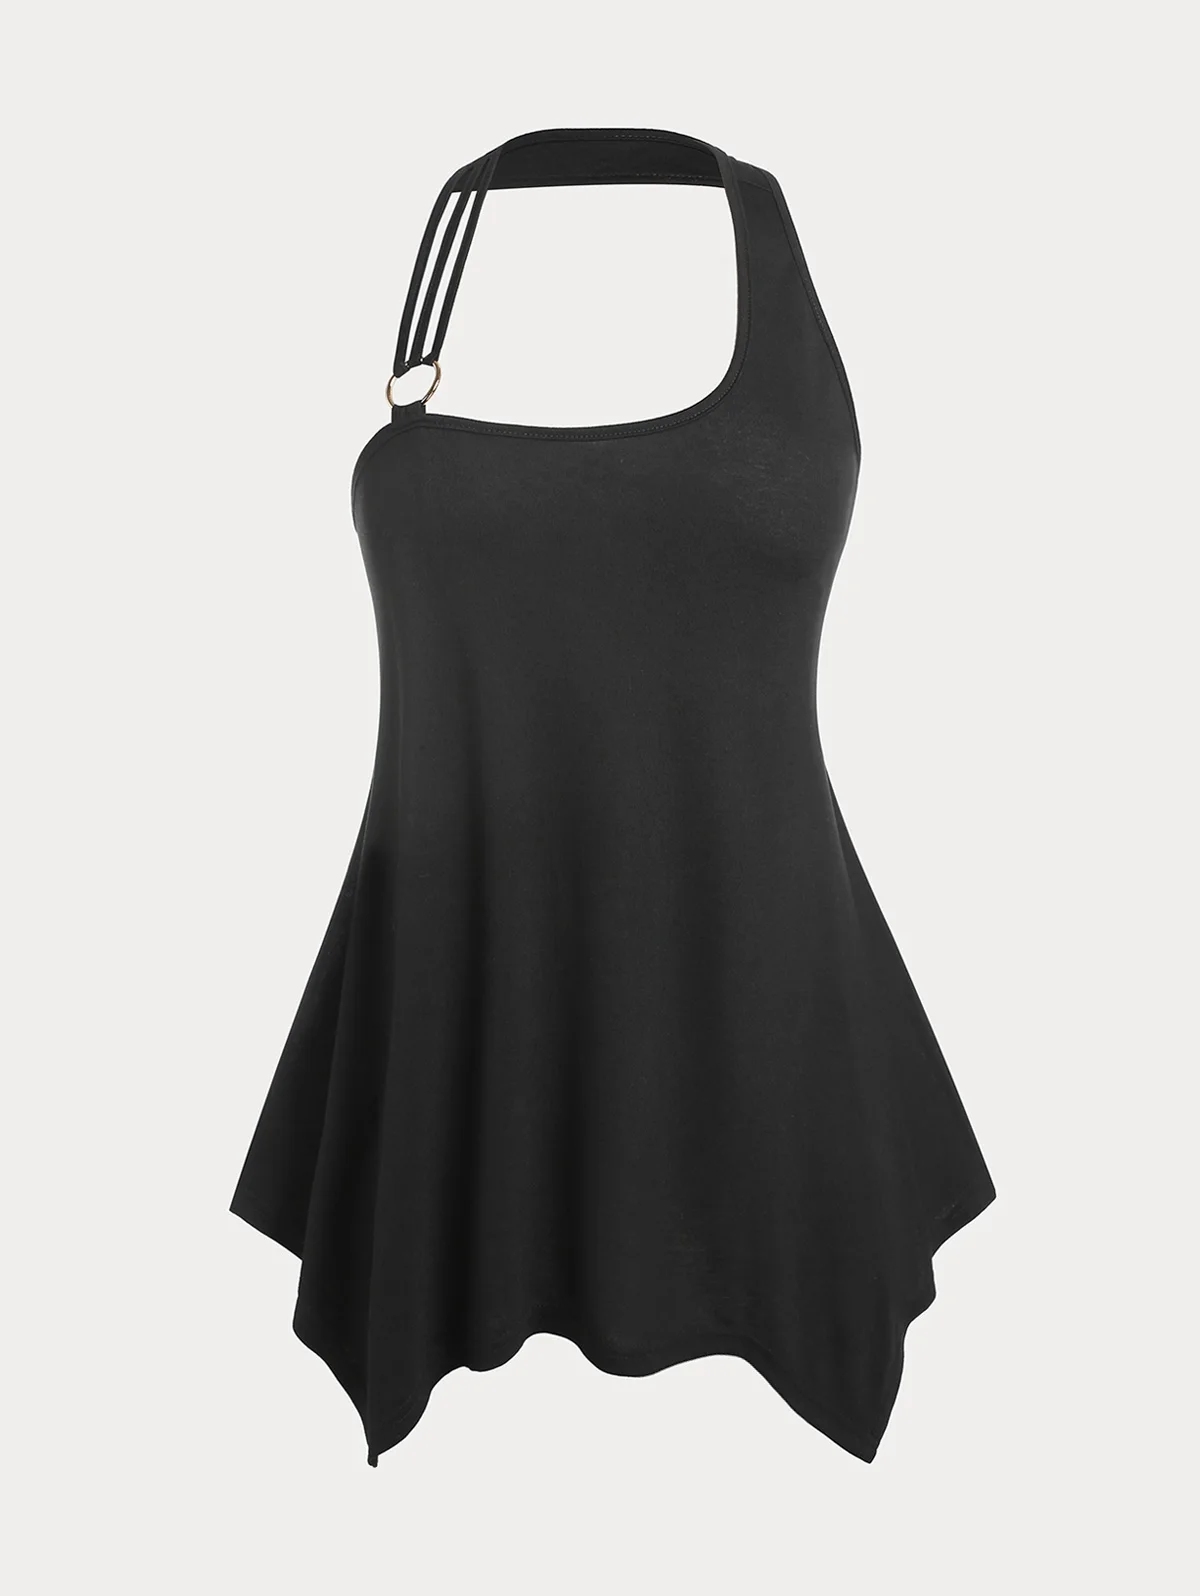 ROSEGAL Black Handkerchief Skew Neck Backless Tanks Or Fashion Multi Colorblock V-Neck Tunic Tops 4X Women's Clothing For Summer